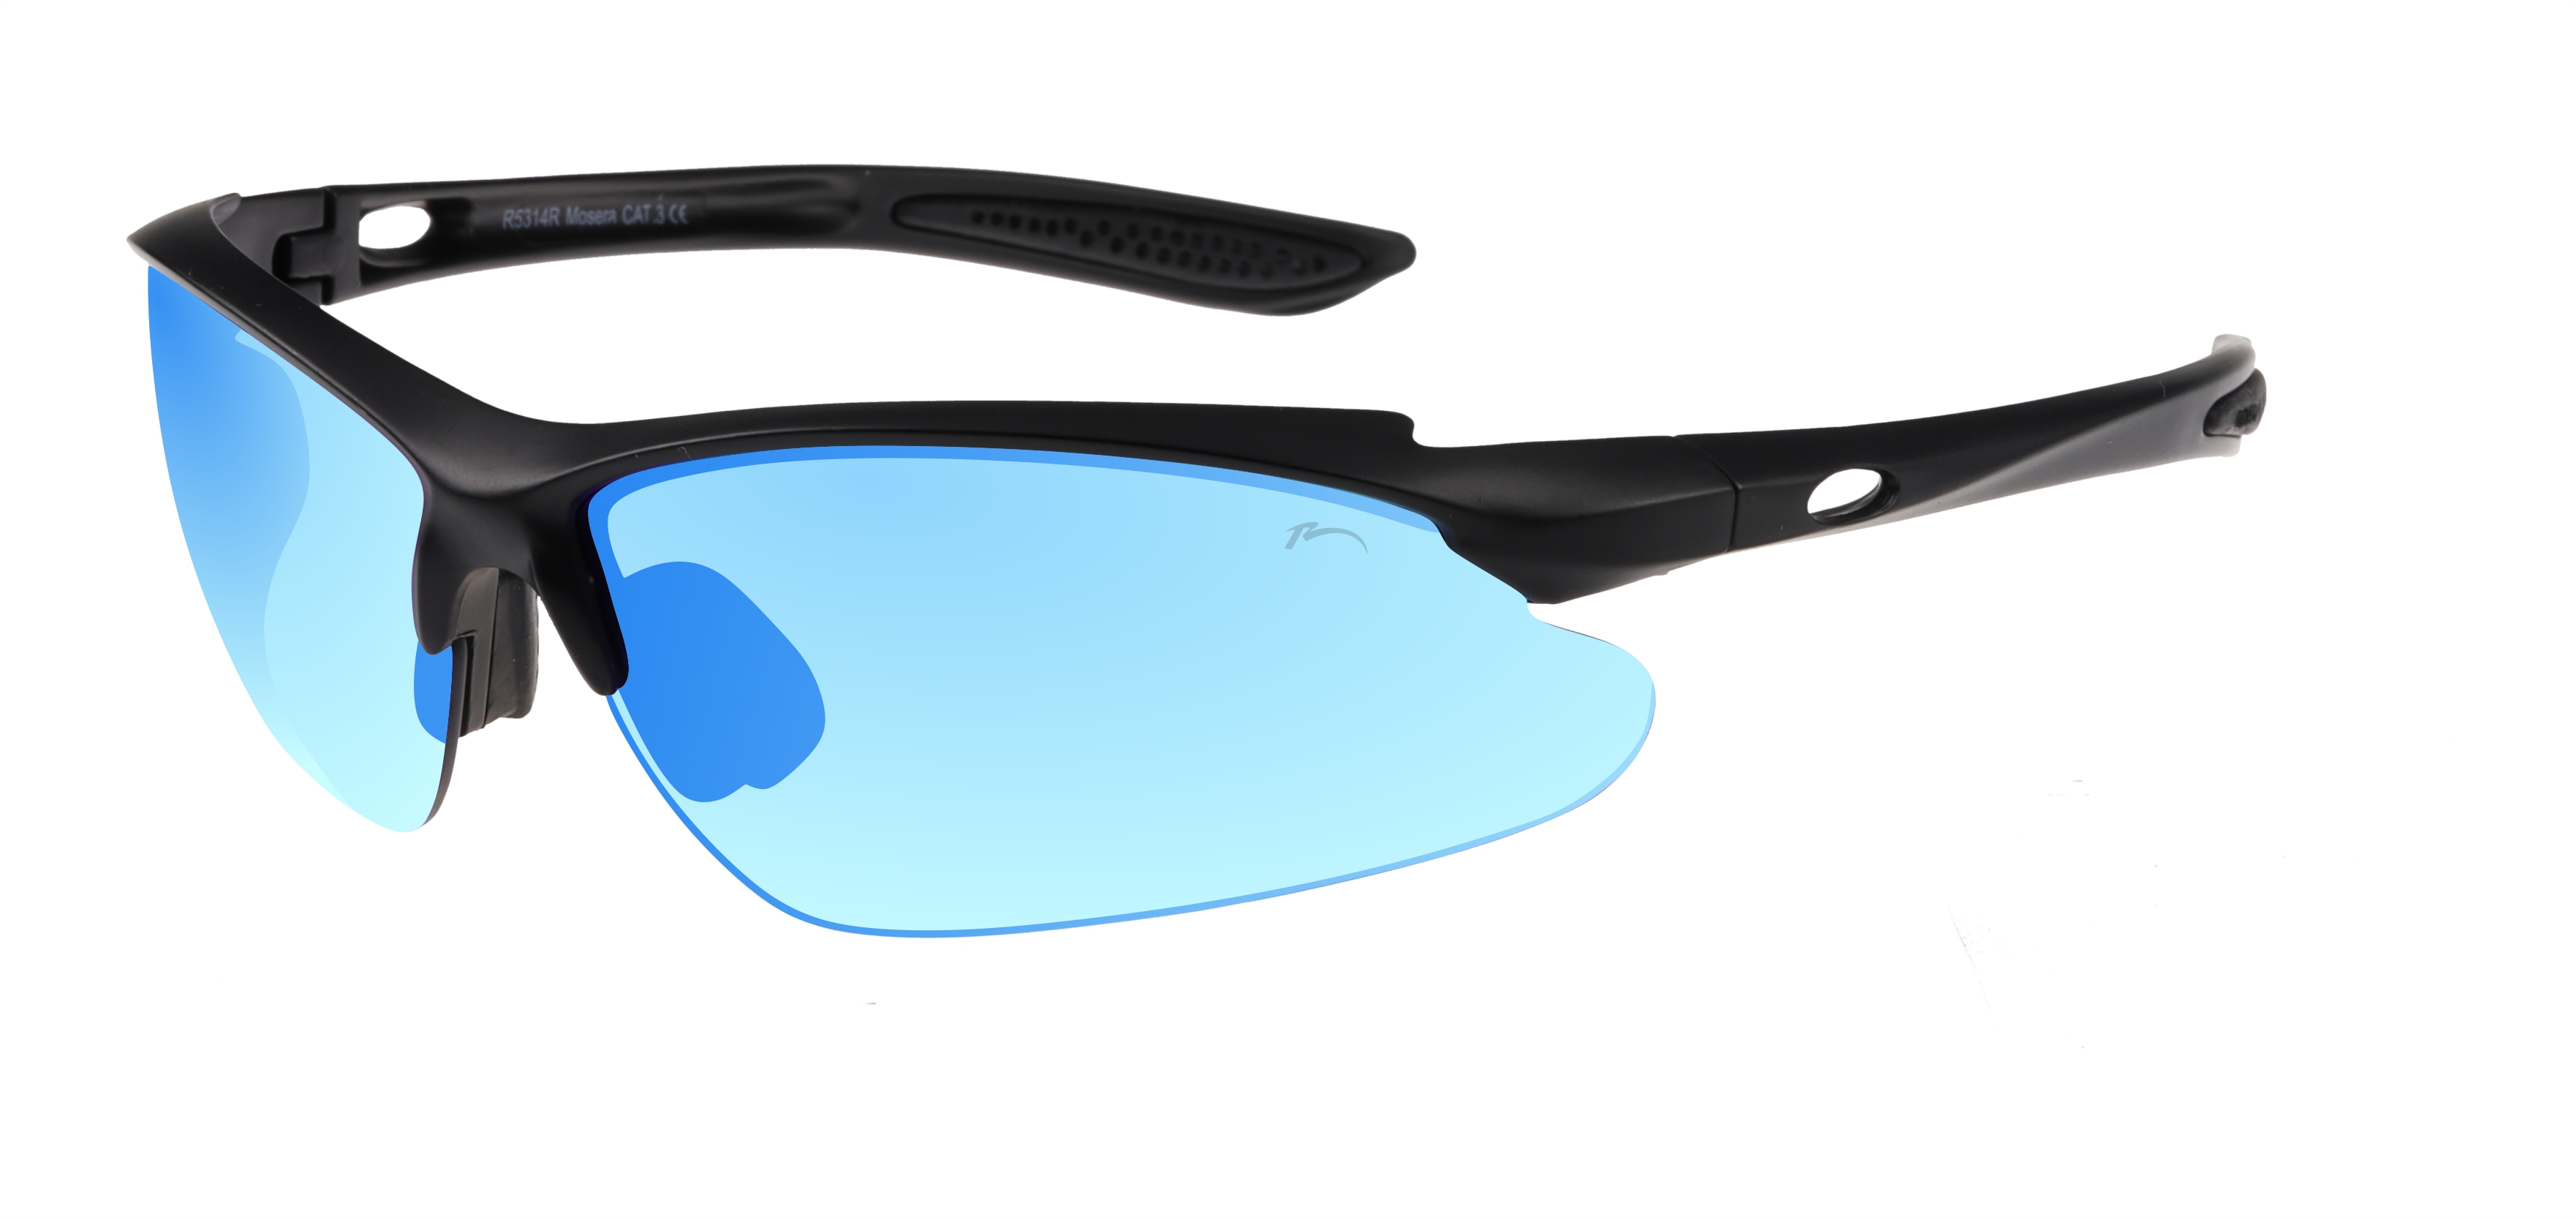 Sport sunglasses  Relax Mosera R5314R standard